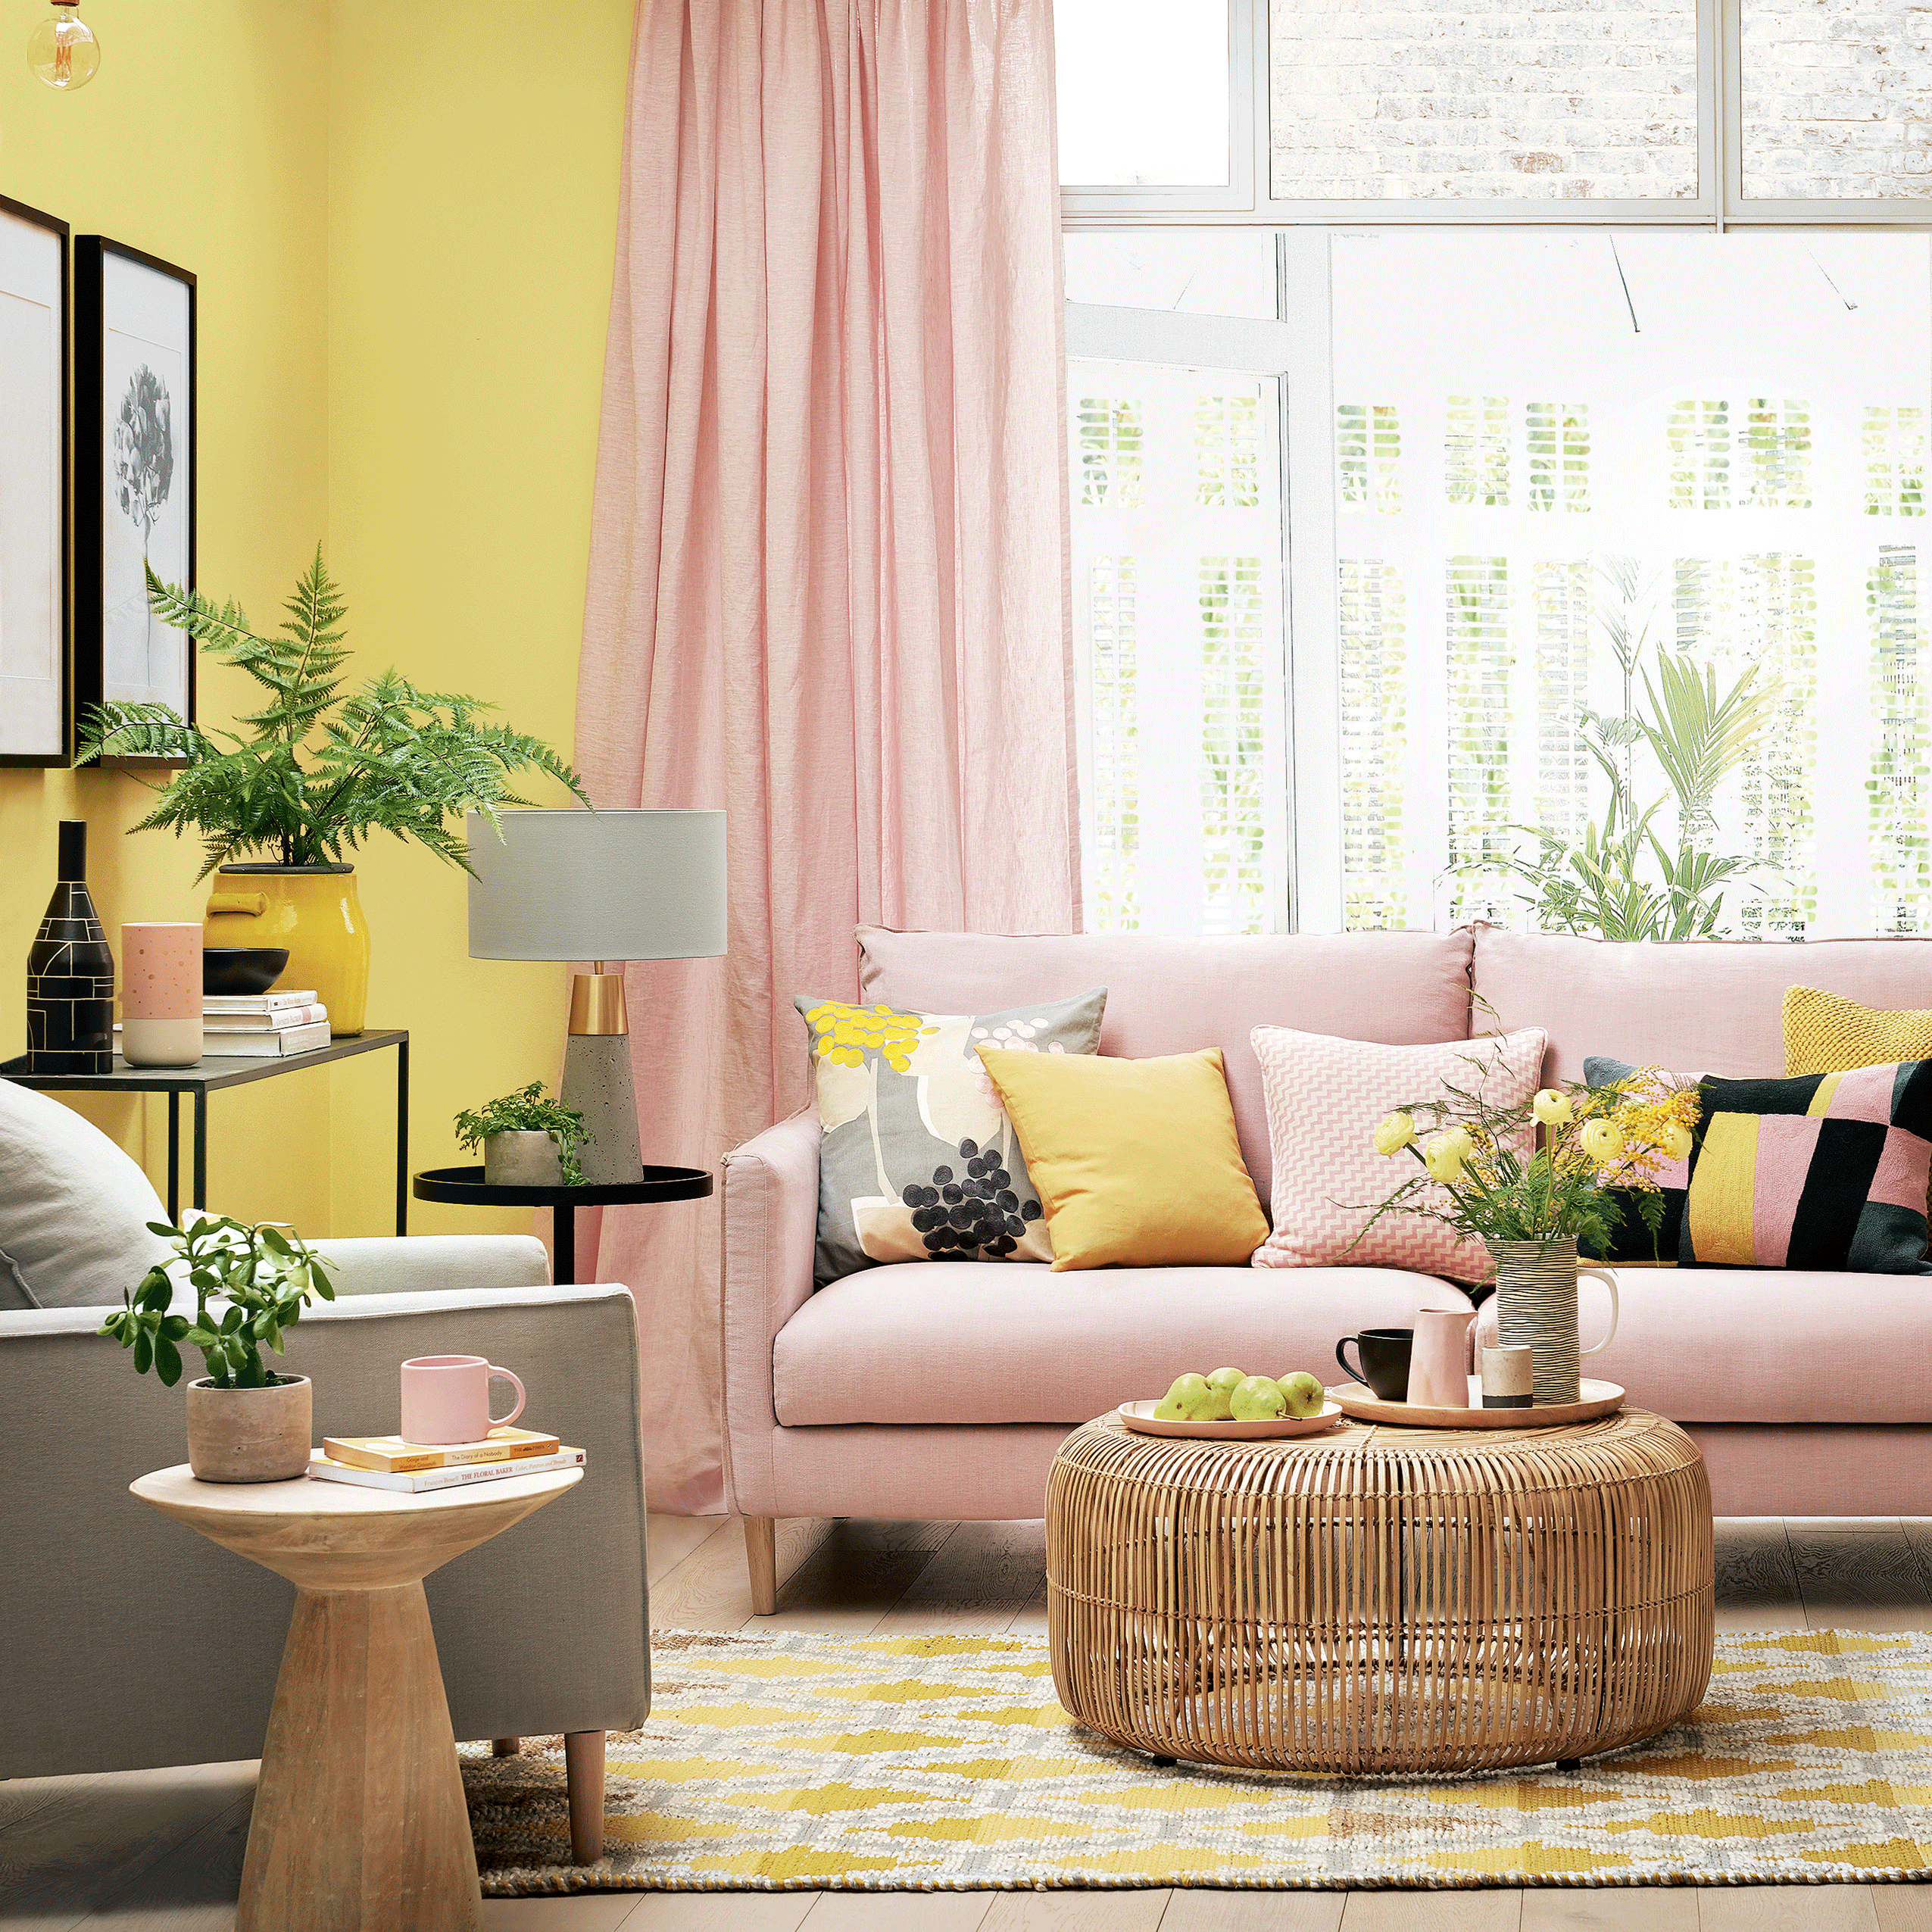 living room with photoframe on yellow wall and rug on floor